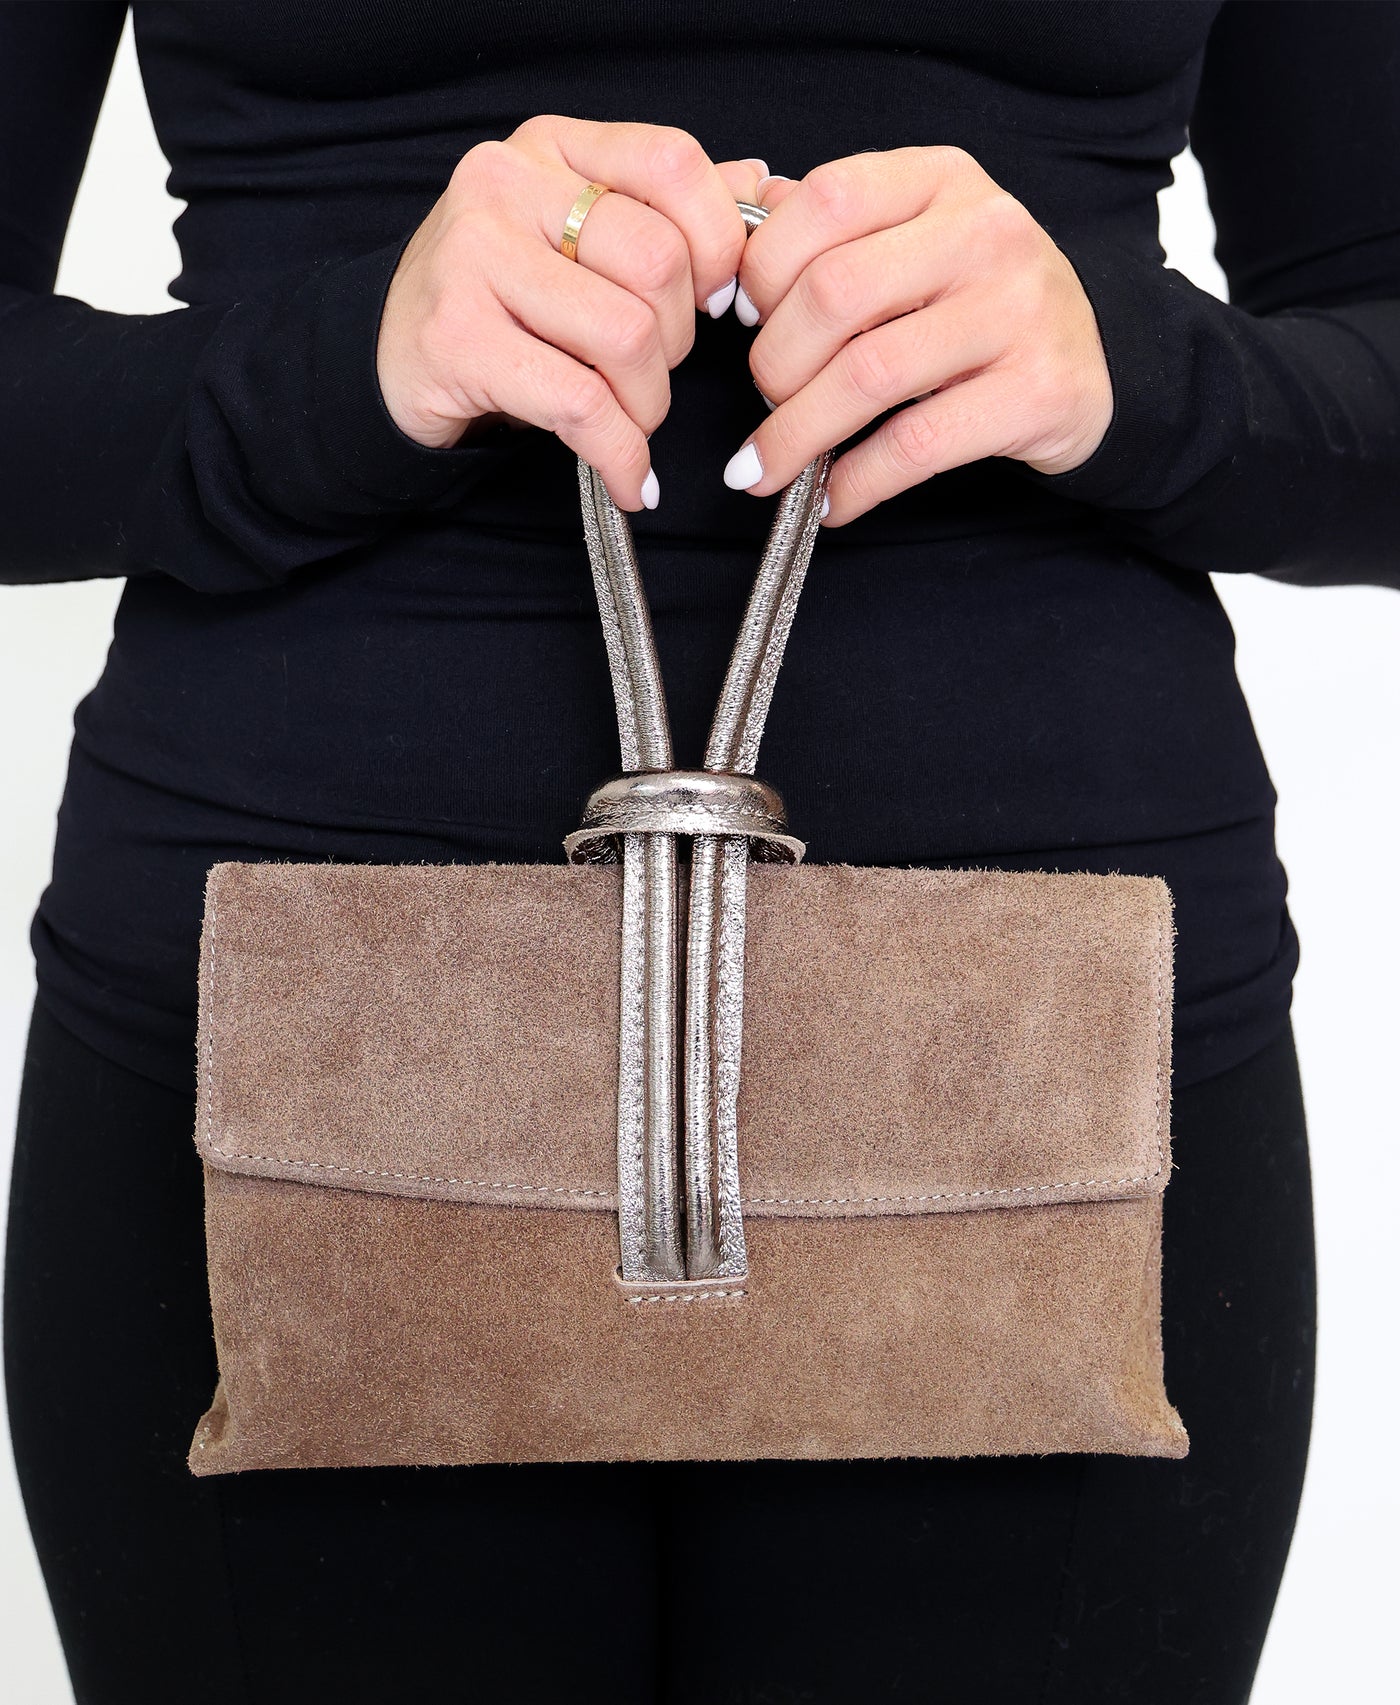 Suede Handbag w/ Metallic Leather Loop Handle image 1